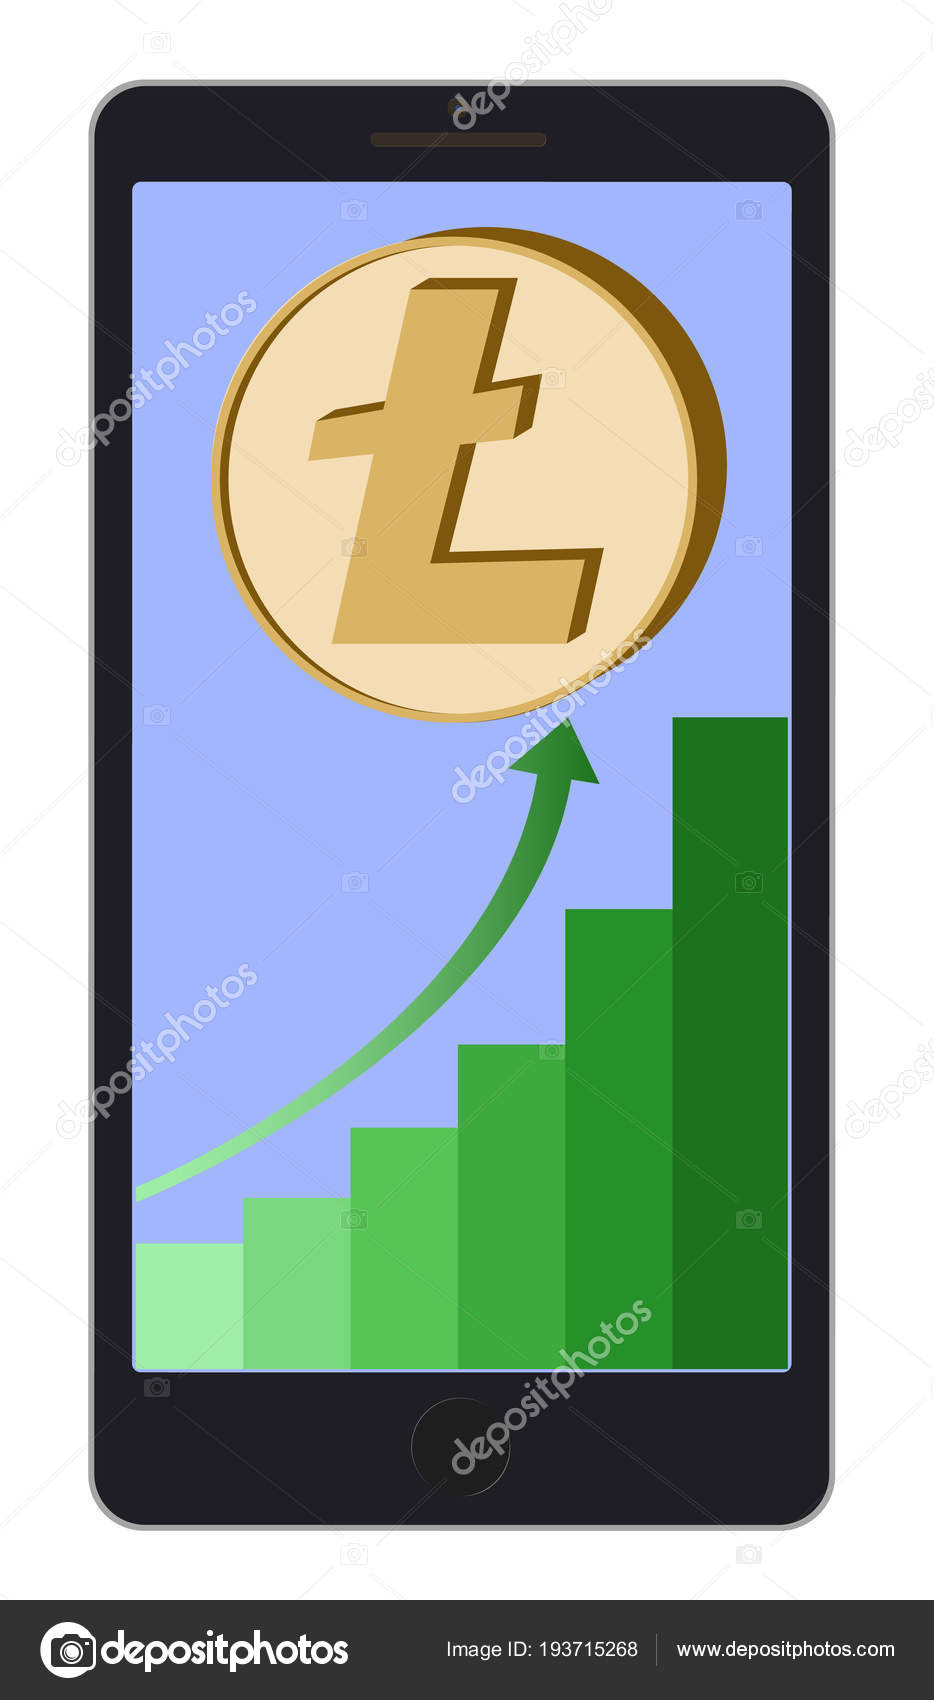 Litecoin Growth Chart